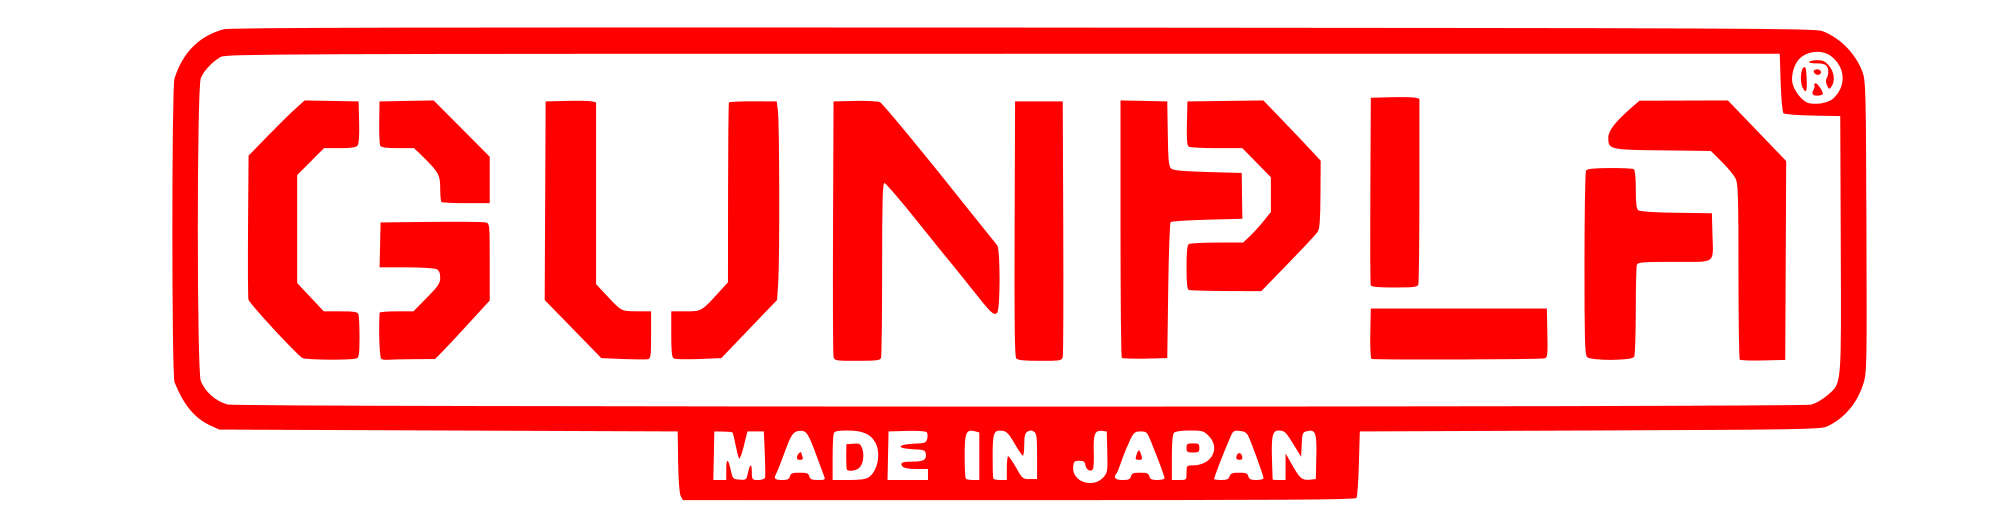 Gundam HG Logo - Gunpla | The Gundam Wiki | FANDOM powered by Wikia